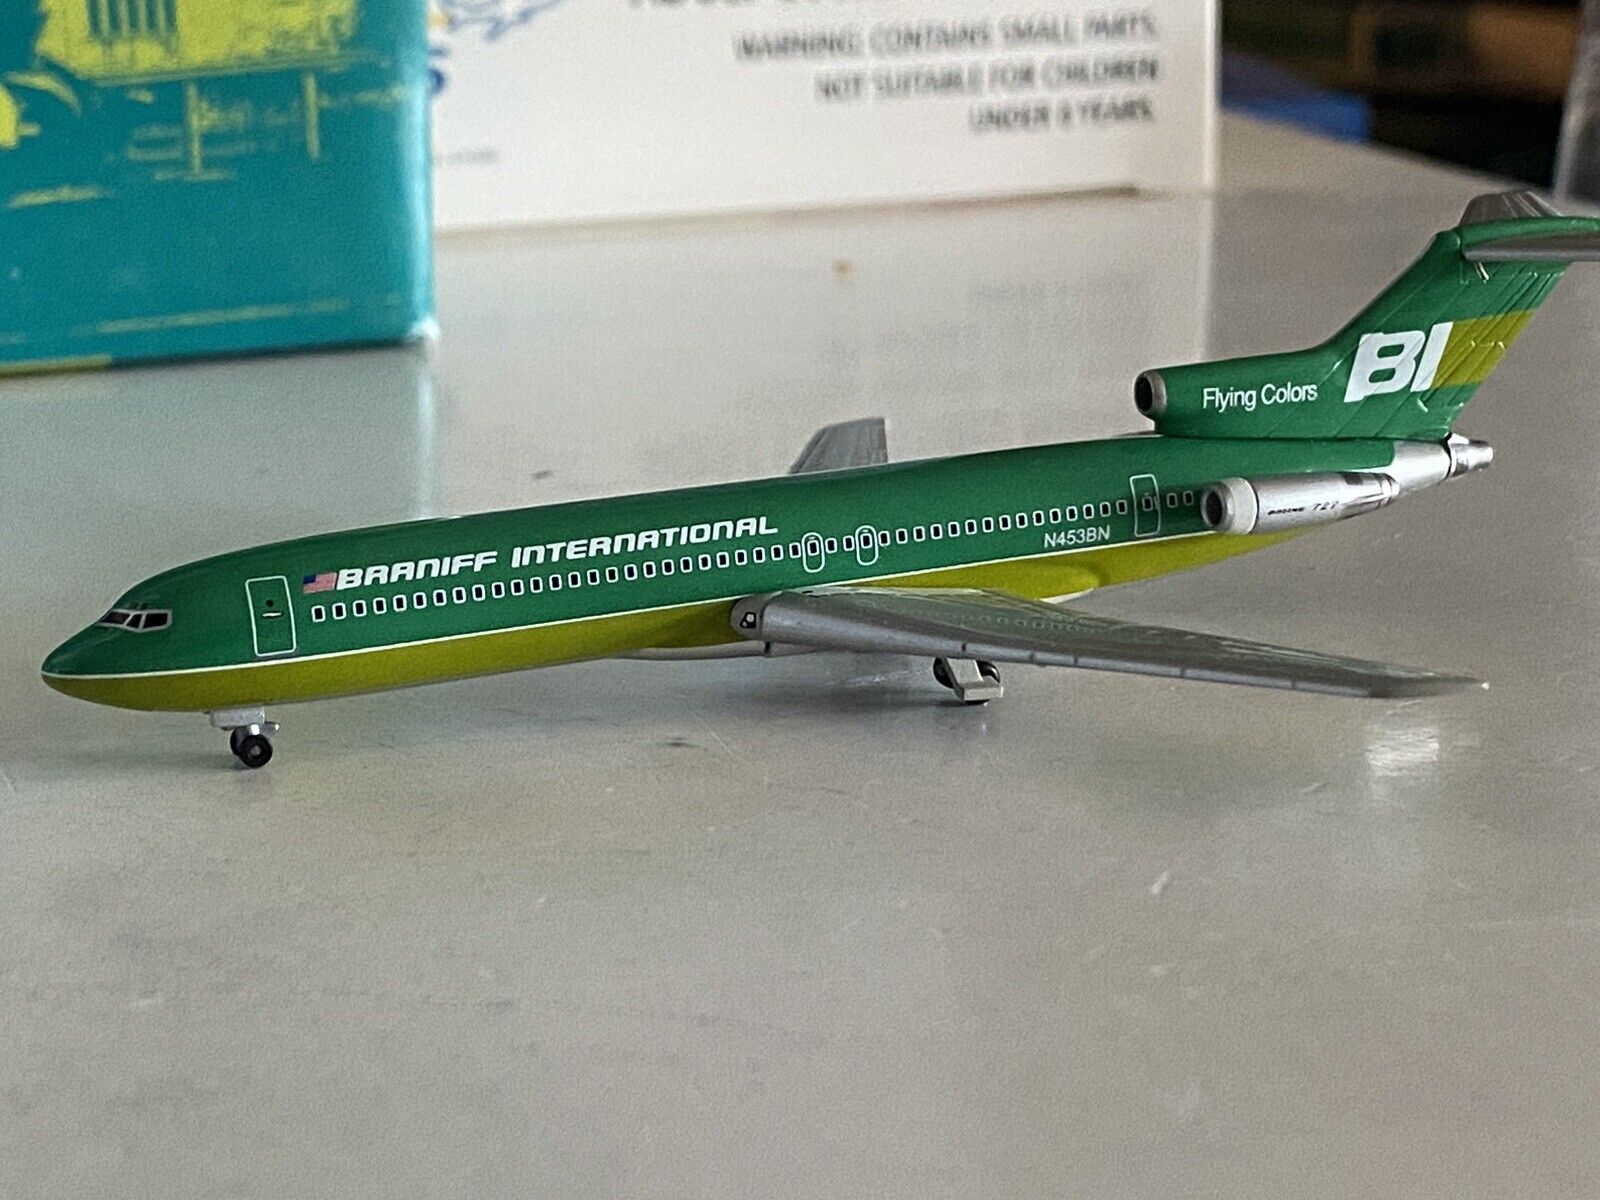 Jet-X Braniff International Boeing 727-200 1:400 N453BN JX031 Green